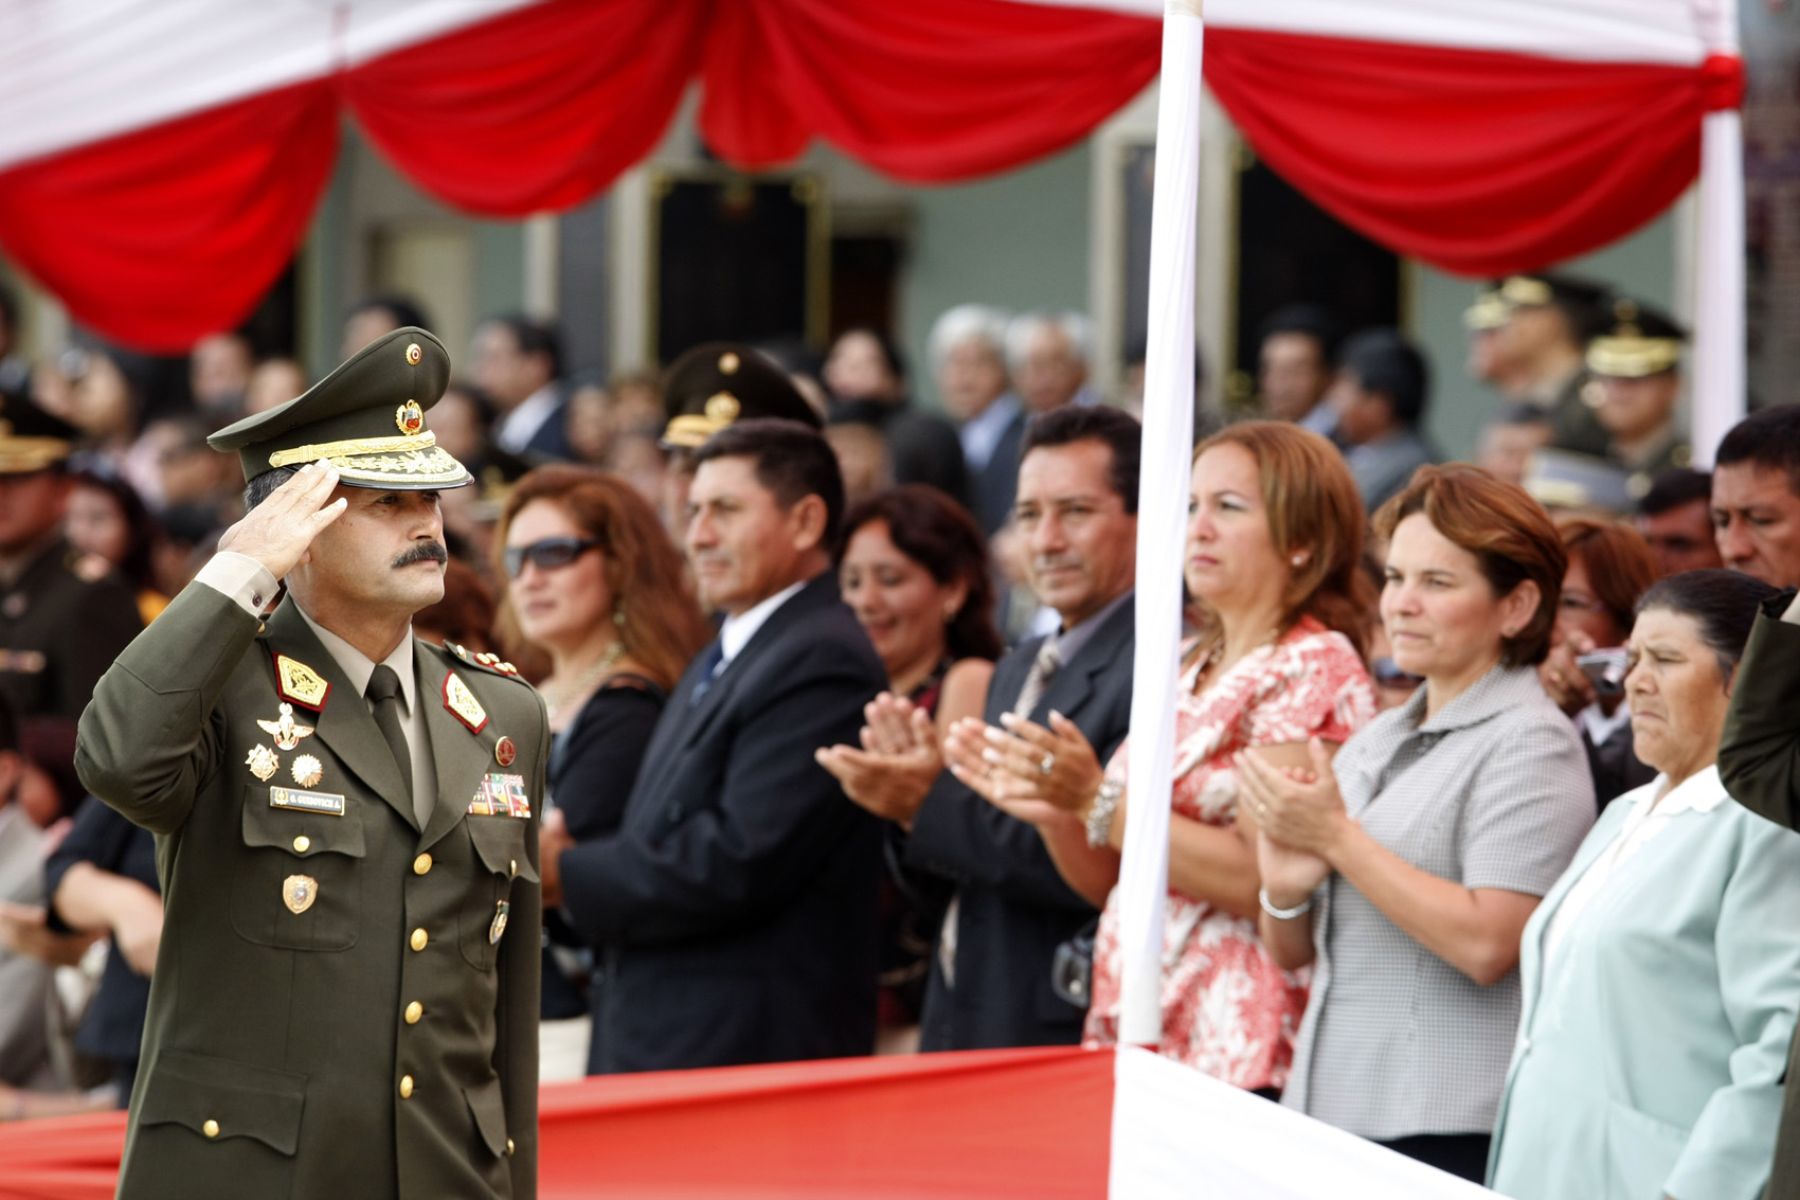 El Comandante general del ejercito, Otto Guibovich le dió la bienvenida a alrededor de 300 aspirantes a cadetes del ejército.

Foto:ANDINA / Juan Carlos Guzmán Negrini.